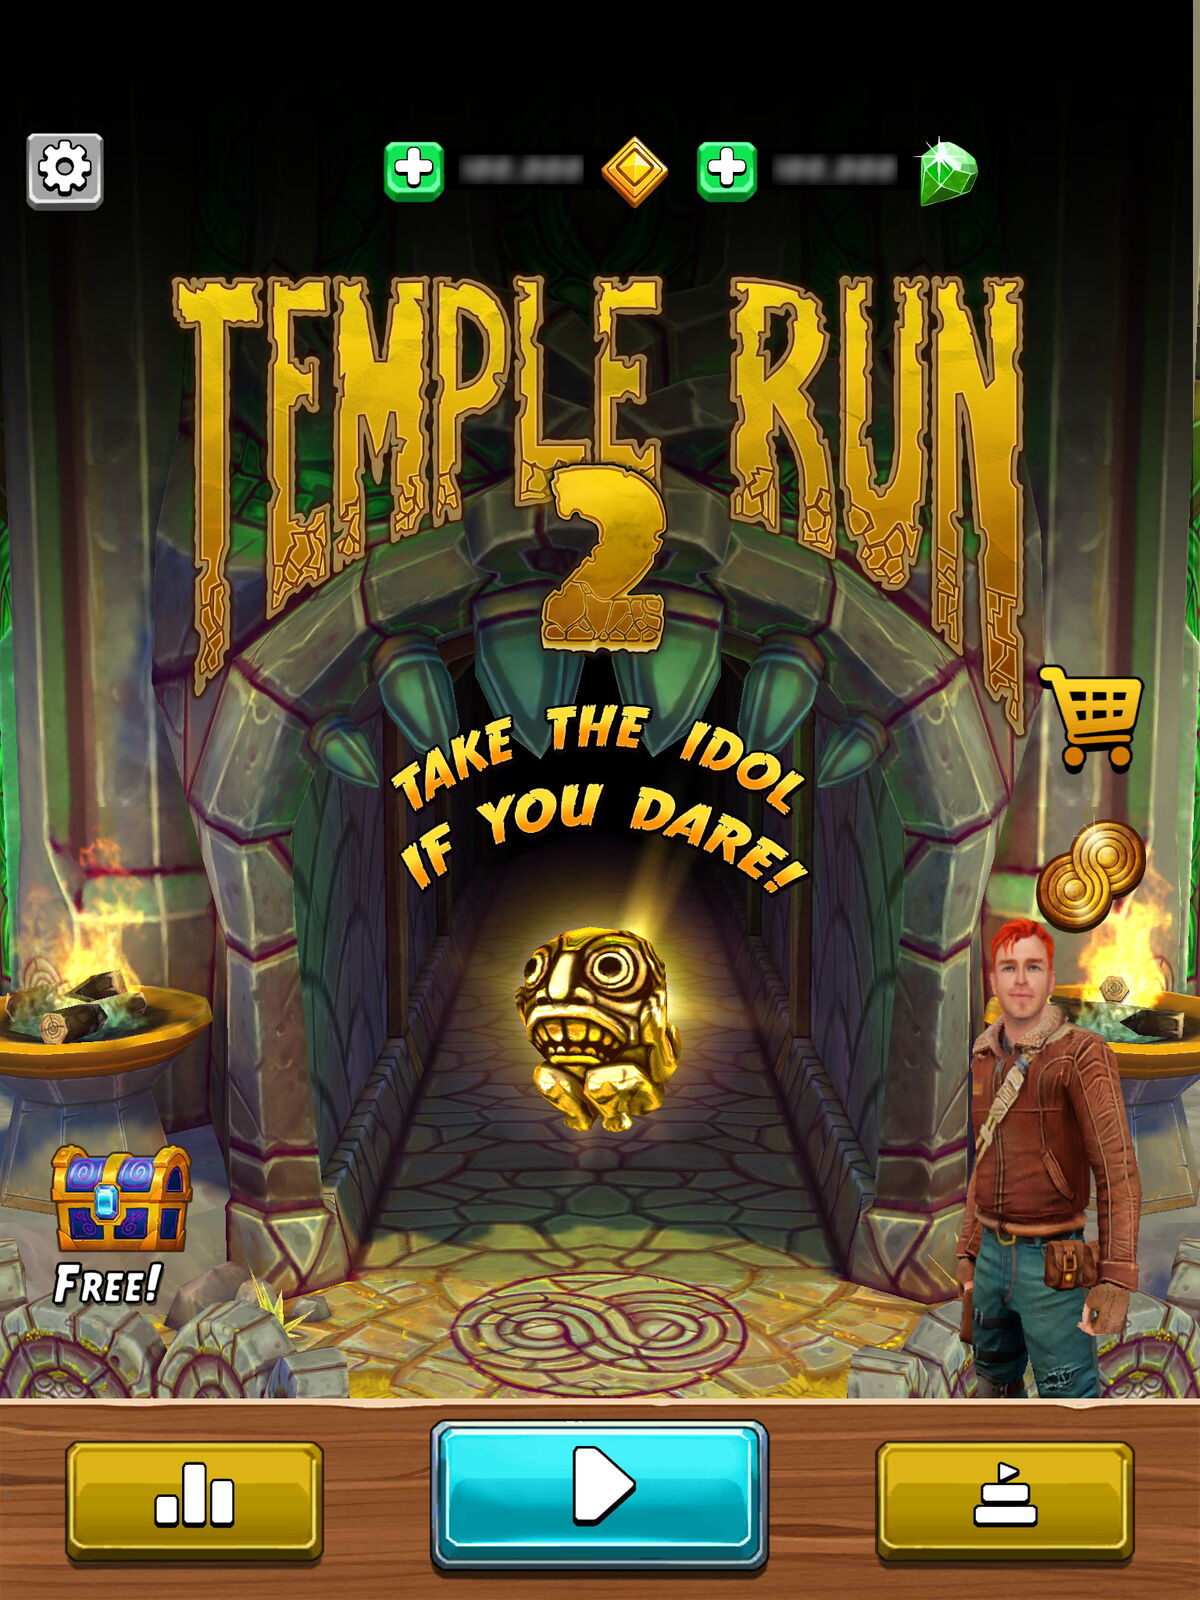 Temple Run 2 All 6 Maps Gameplay, Sky Summit